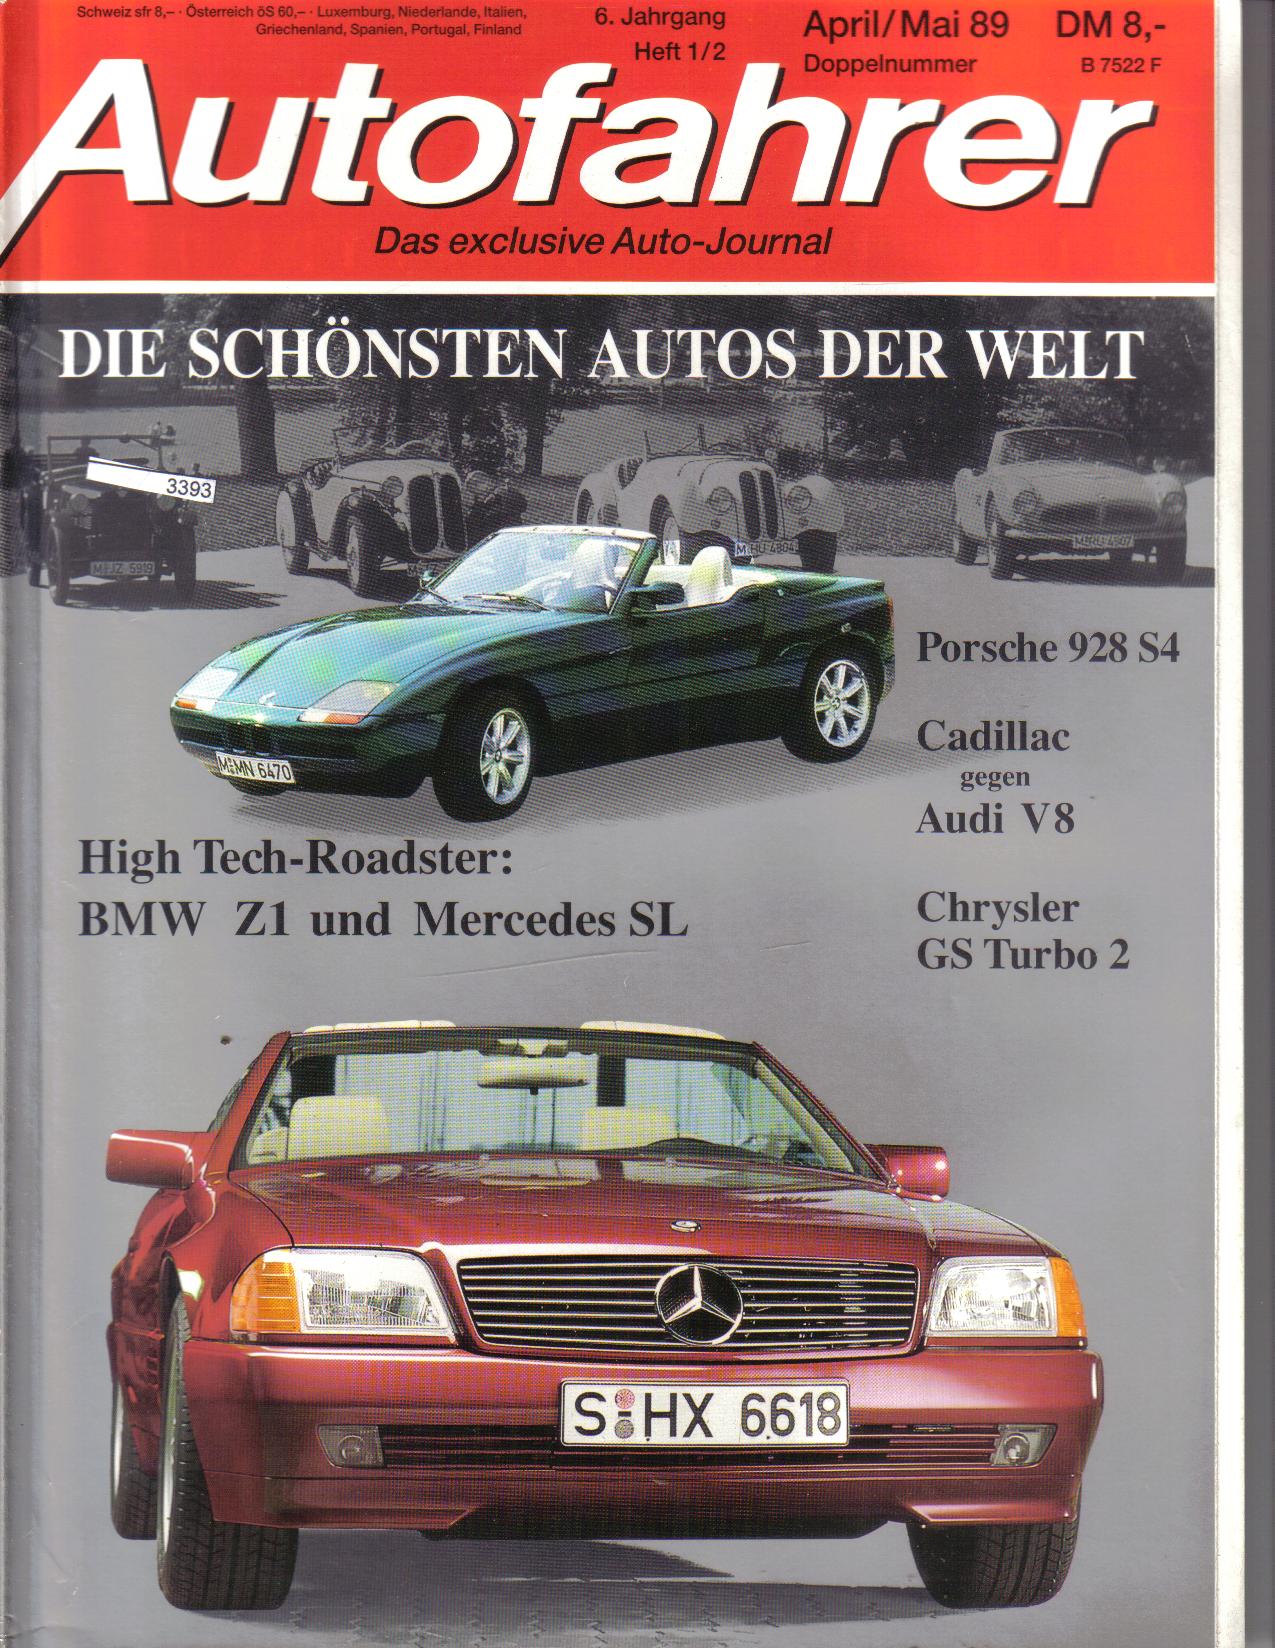 Autofahrer  Das exclusive Autojournal   Heft 1/2 Doppelnummer   April/ Mai 89